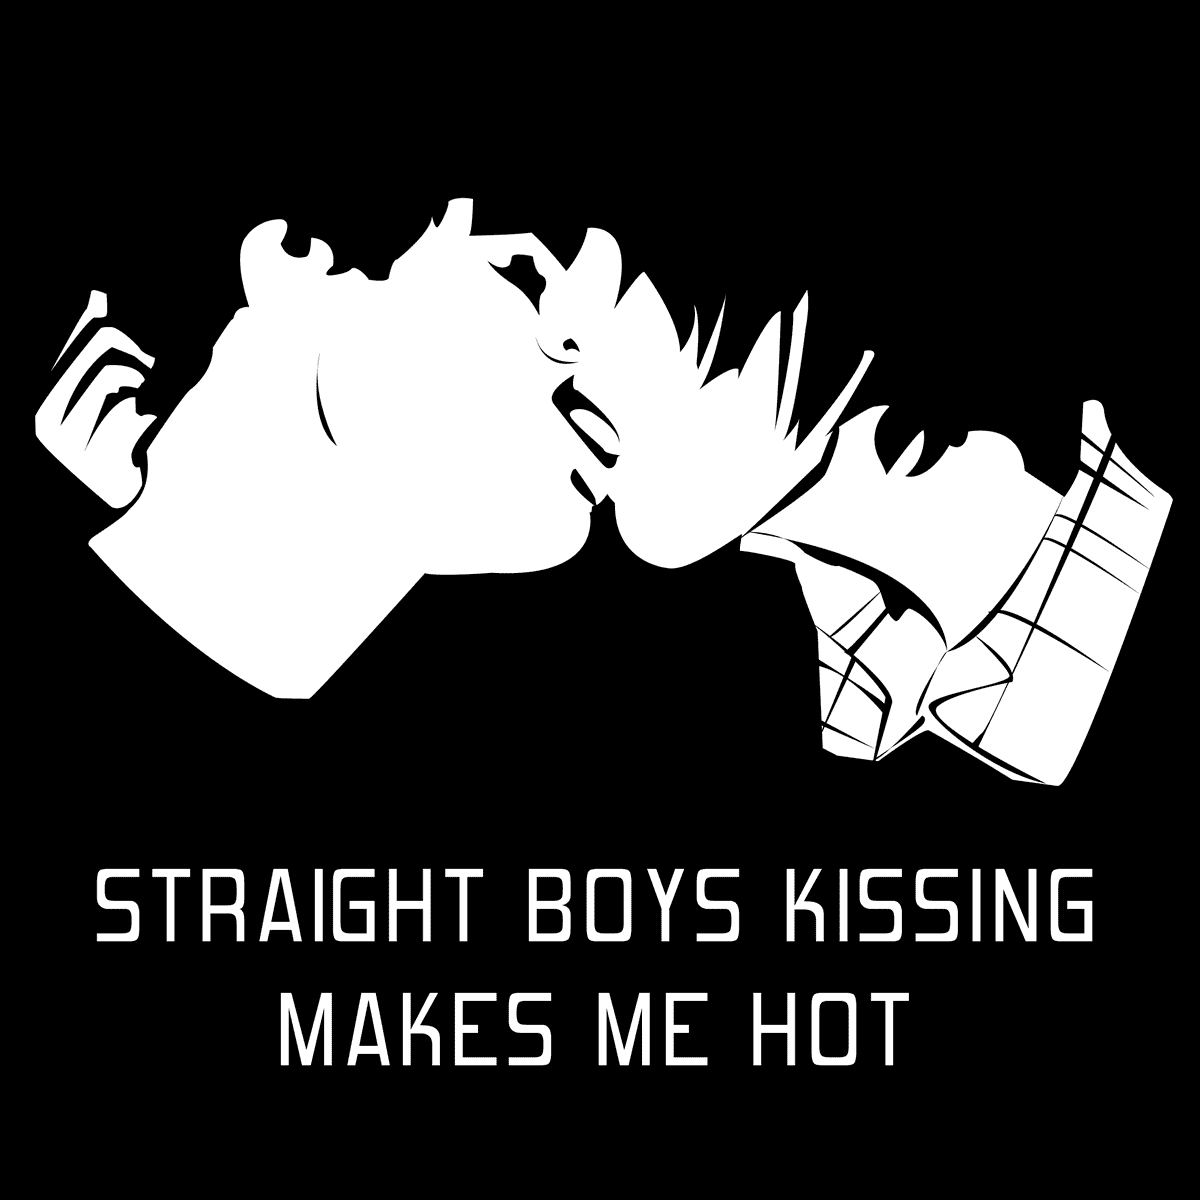 STRAIGHT BOYS KISSING MAKES ME HOT